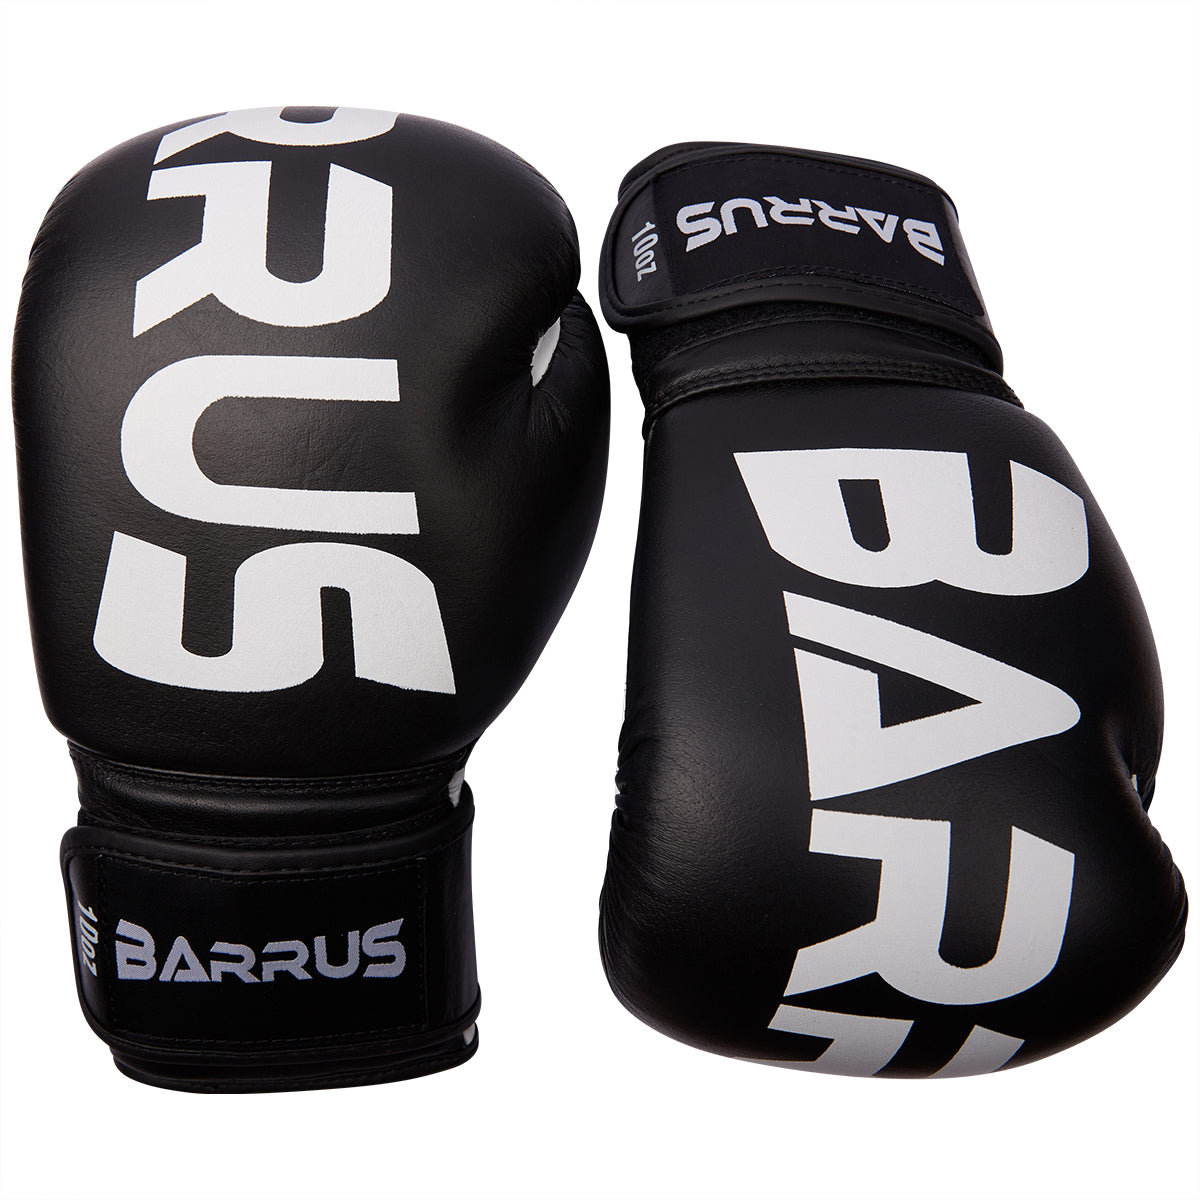 Barrus Boxing Gloves Black